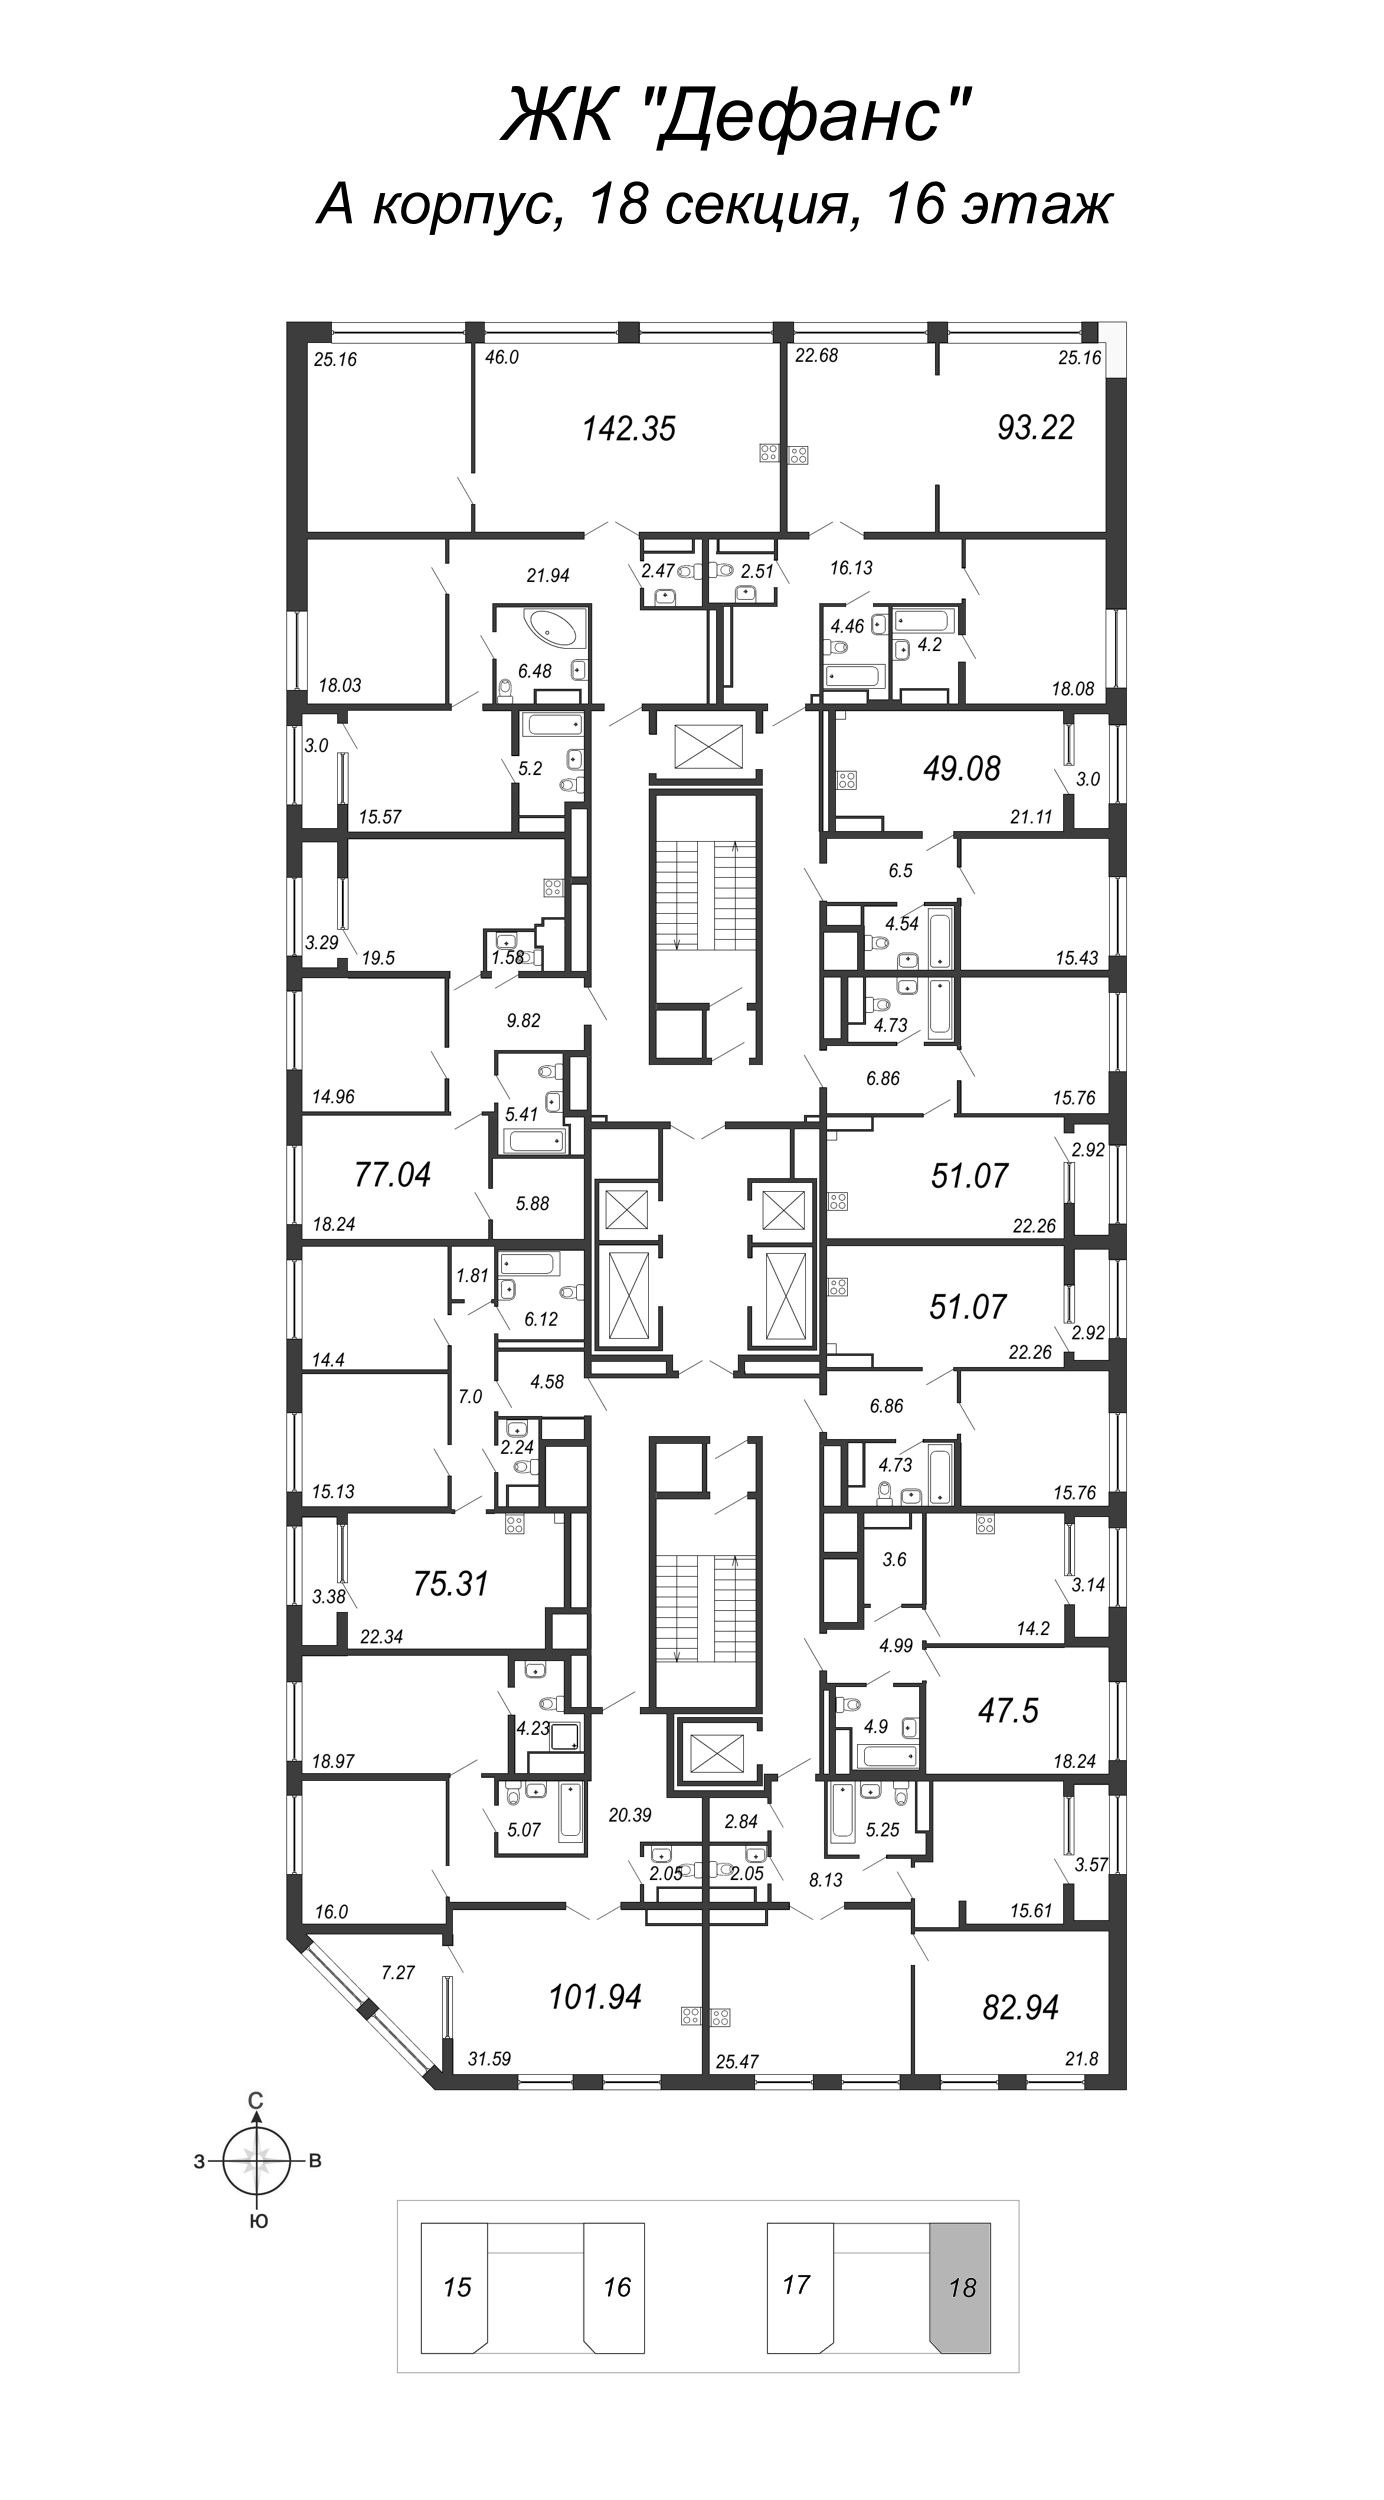 3-комнатная (Евро) квартира, 77.04 м² - планировка этажа